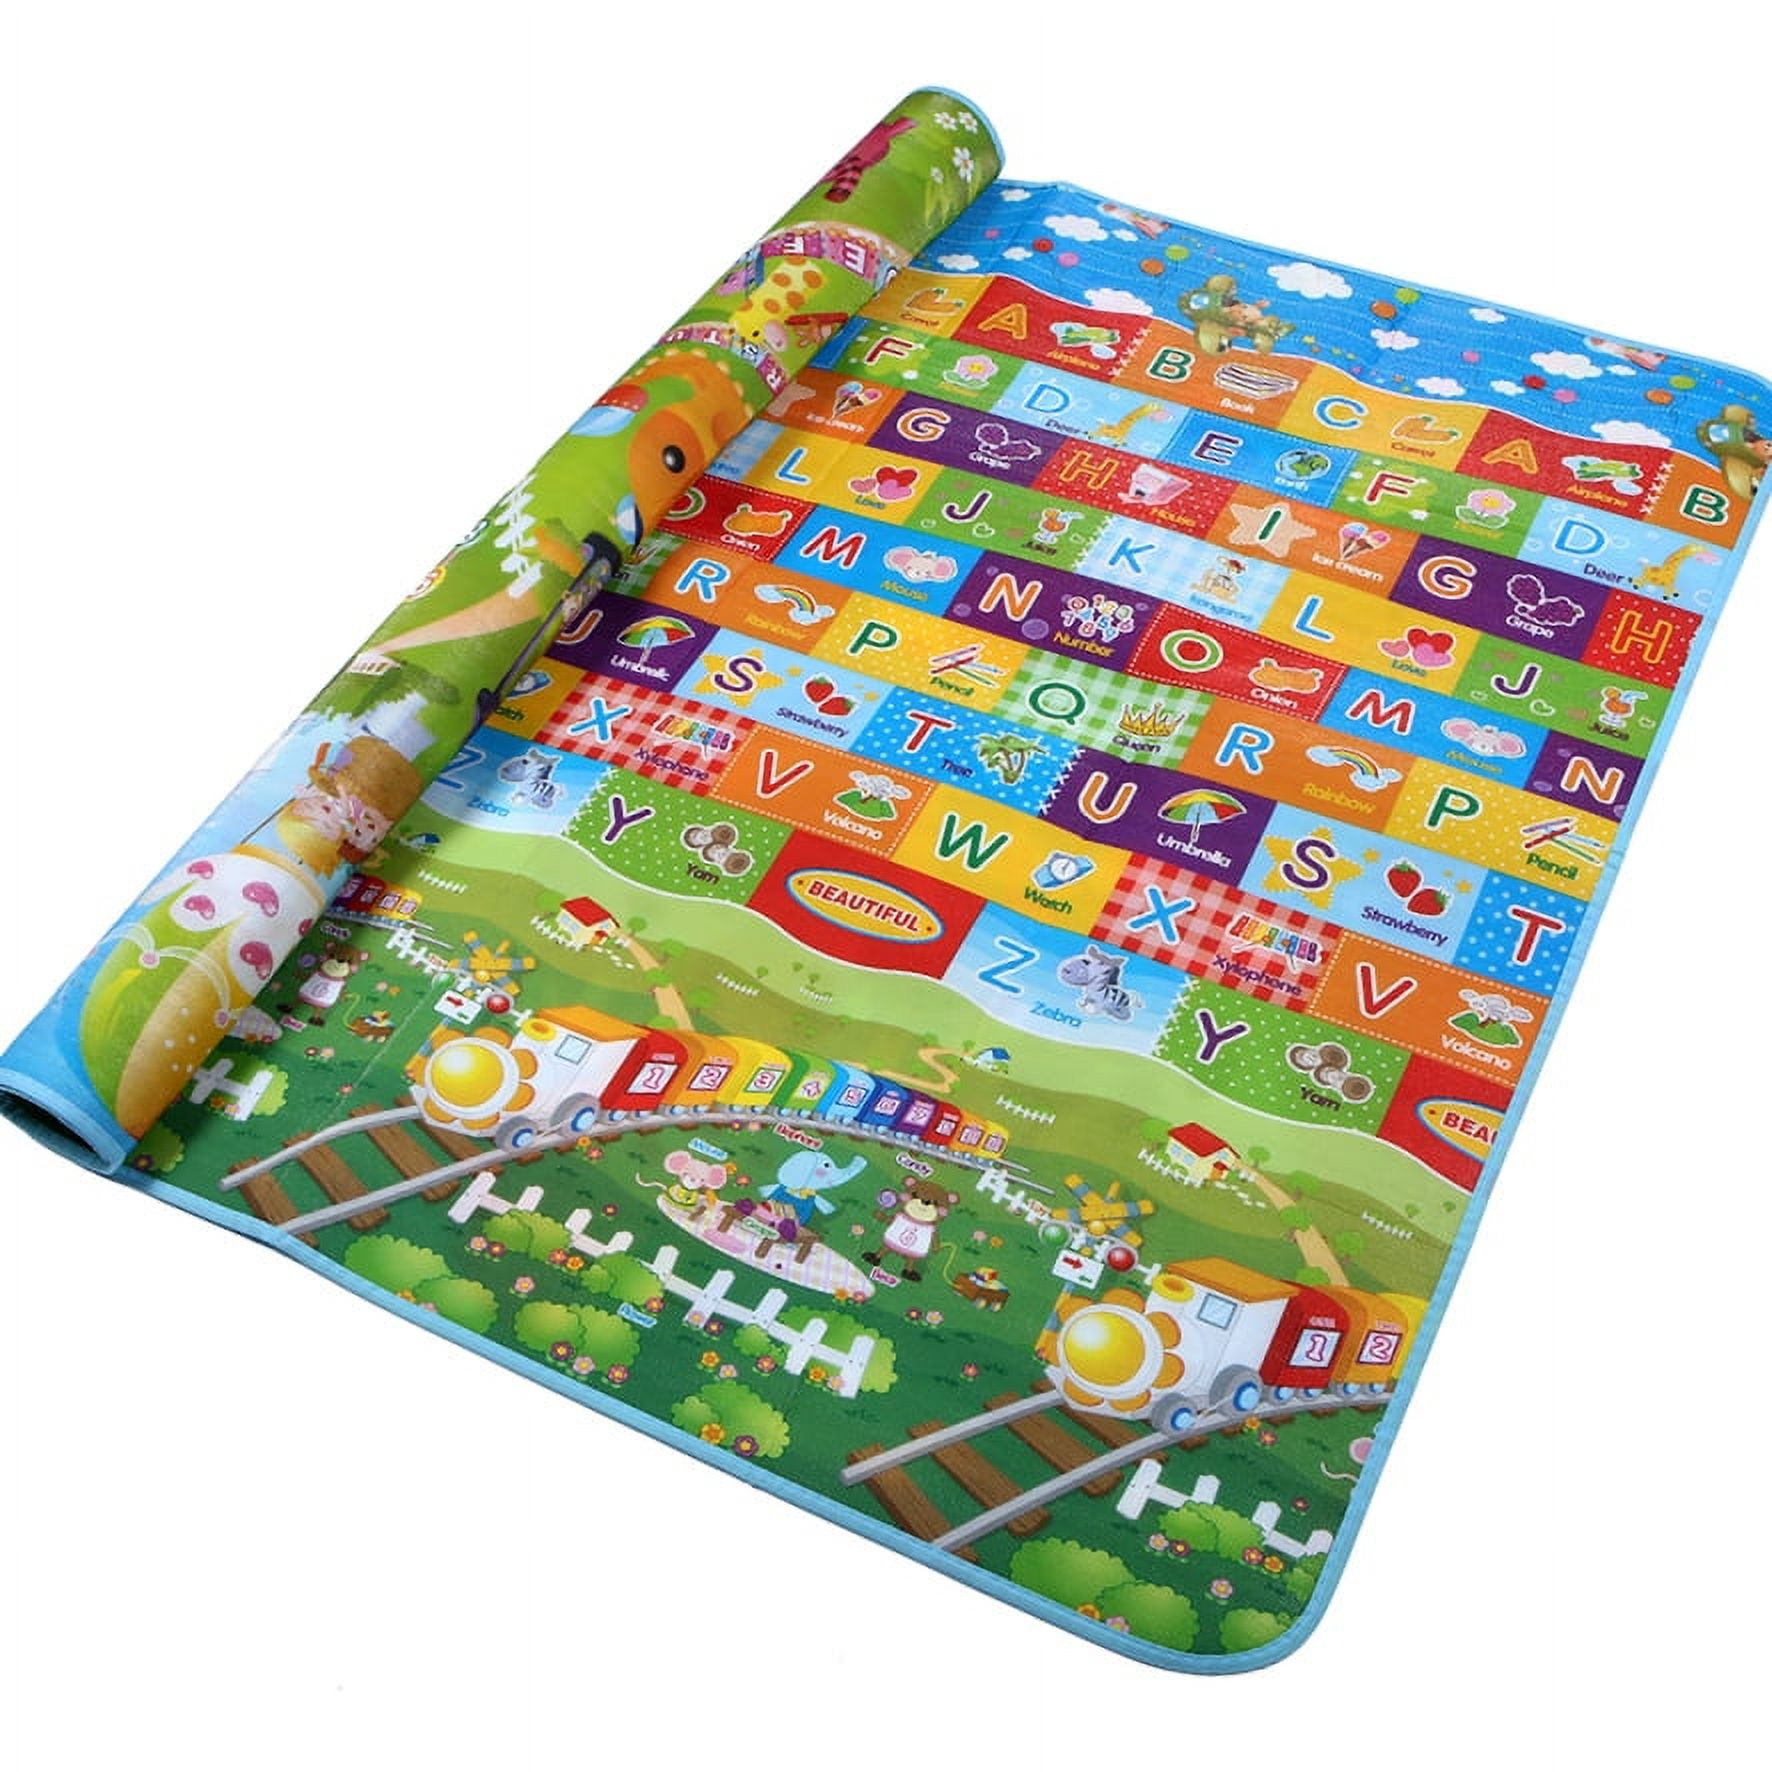 79*71 inch Foldable Baby Crawling Mat Waterproof Padded Play Mat